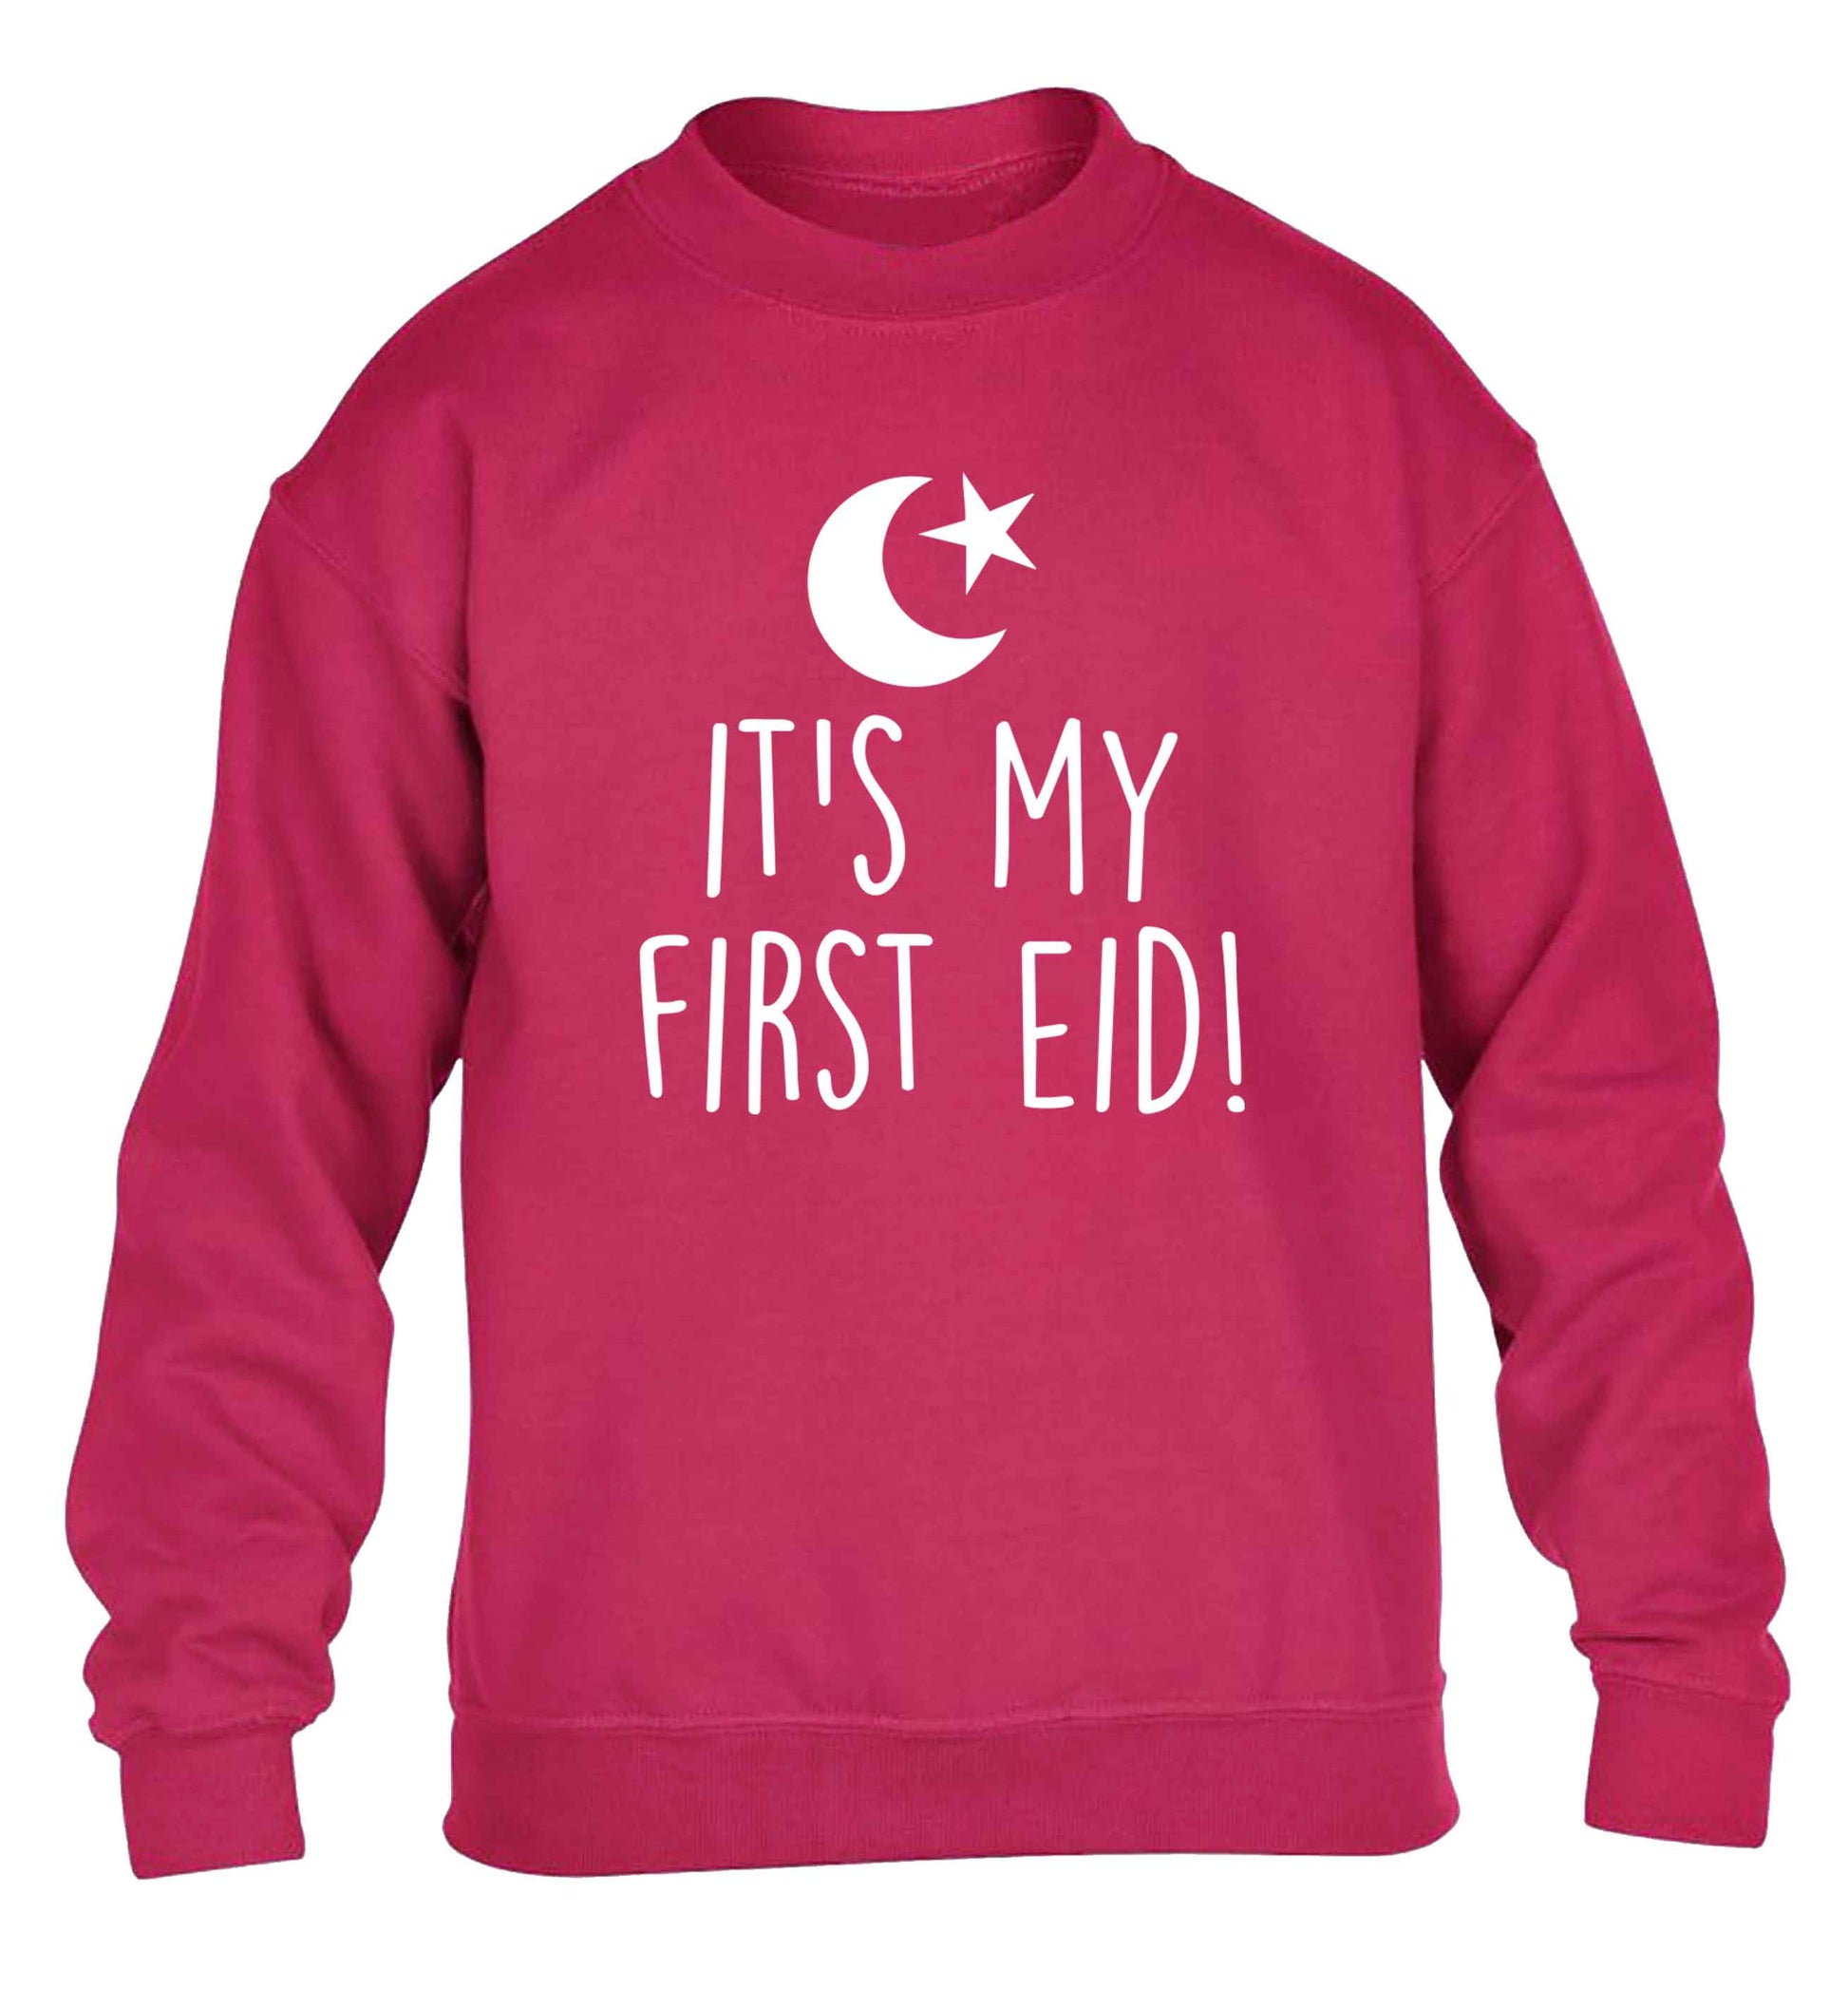 It's my first Eid children's pink sweater 12-13 Years